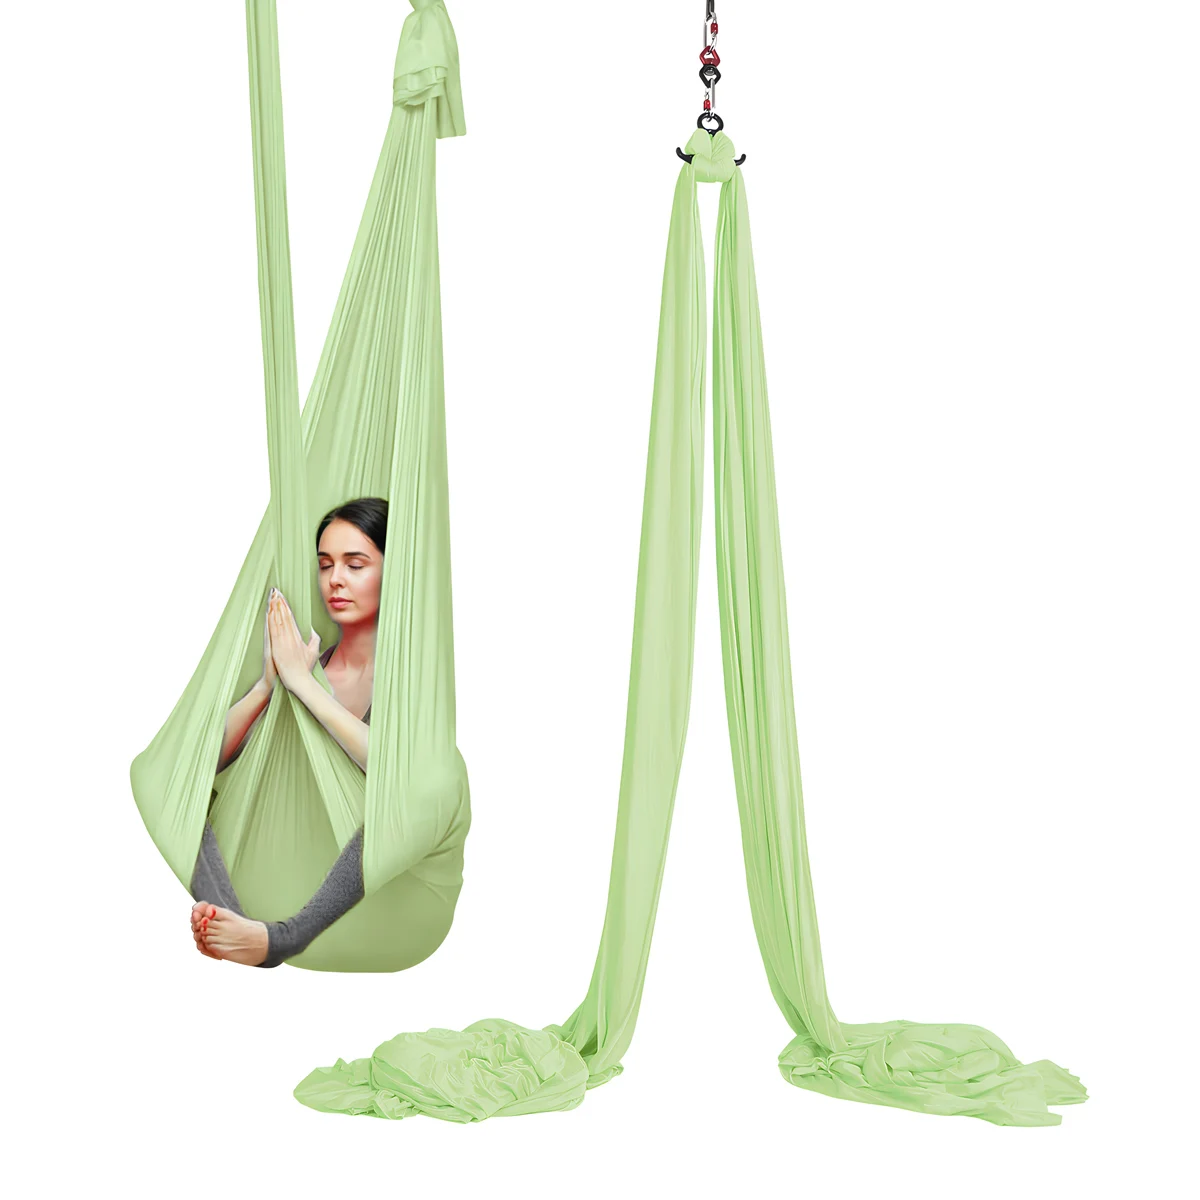 

5m Aerial Silks Fabric Yoga Hammock Swing GYM Fitness for Home Outdoor Anti-Gravity Body Building Pilates Yoga Belt